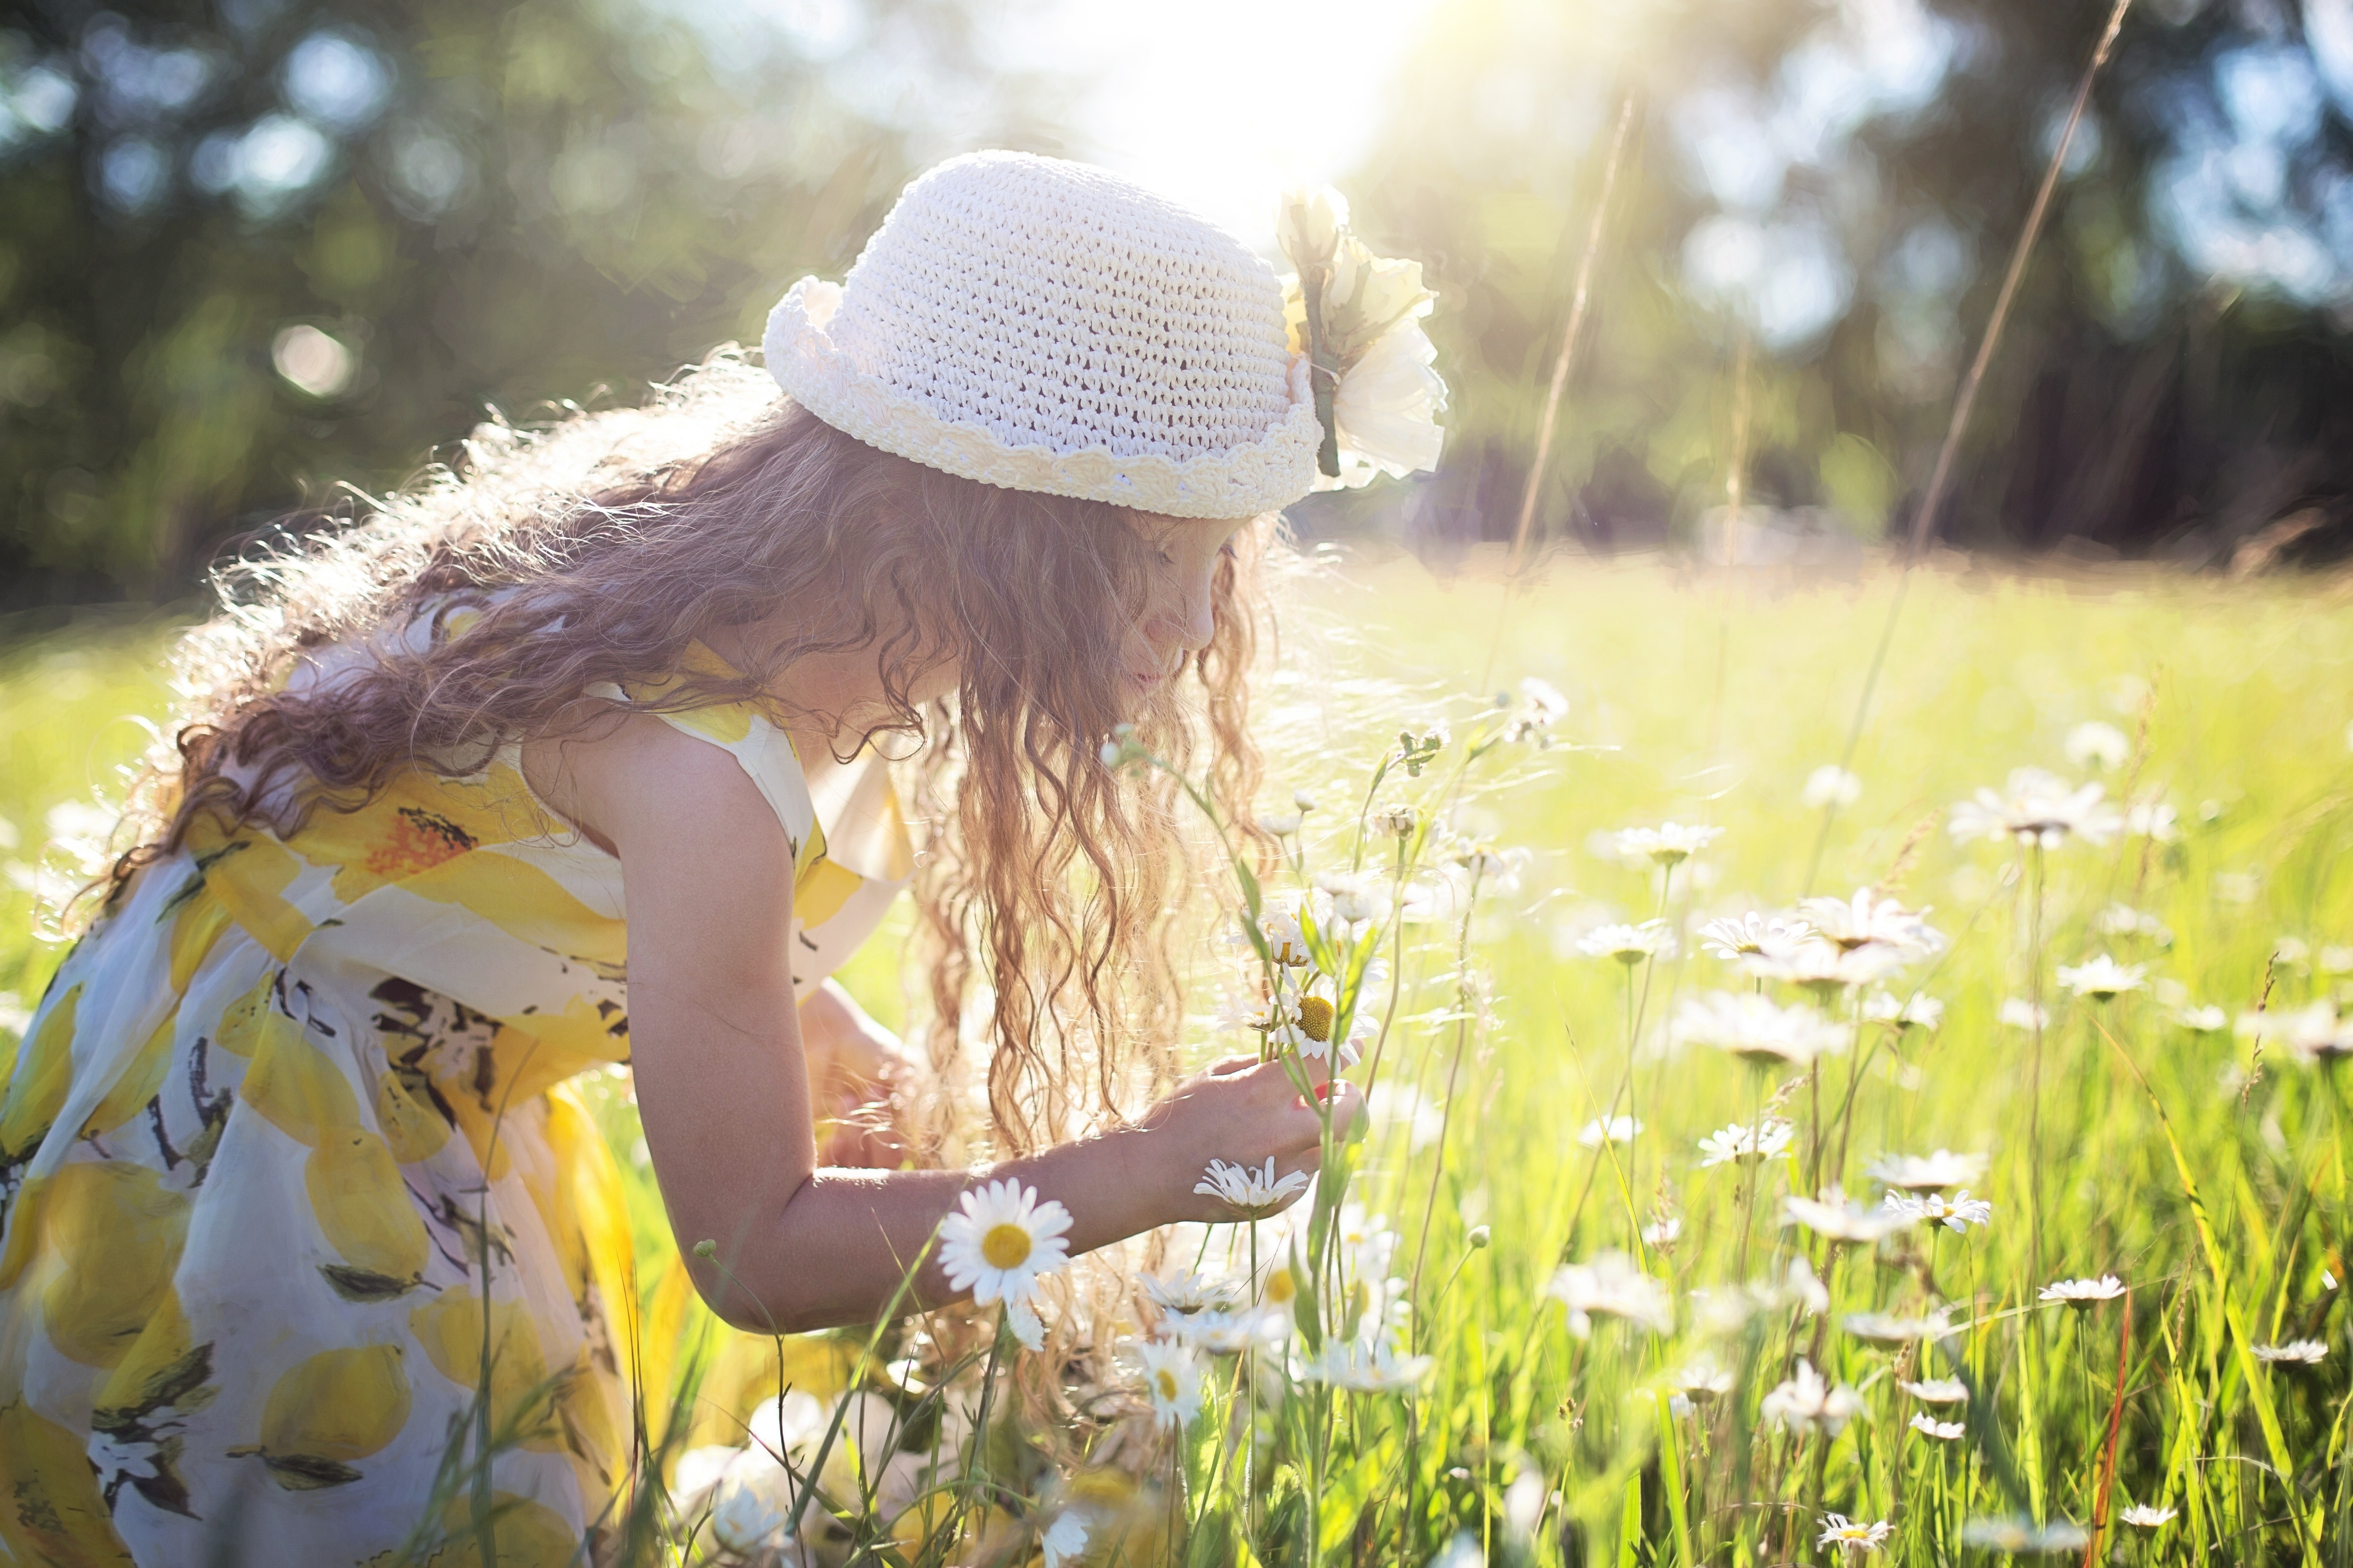 Girl picking flowers in a field